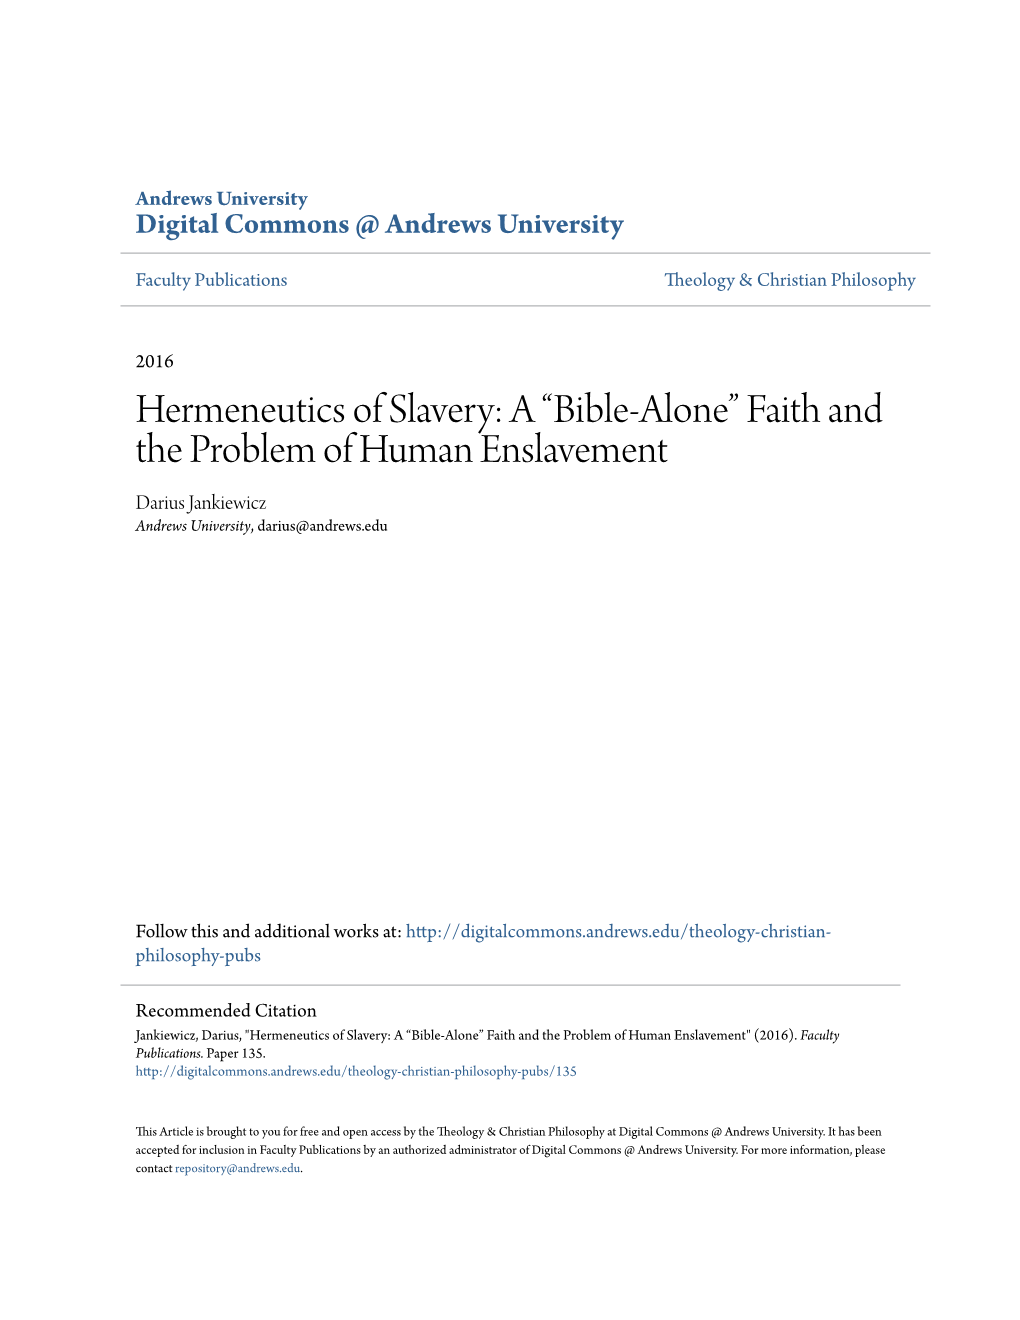 Hermeneutics of Slavery: a “Bible-Alone” Faith and the Problem of Human Enslavement Darius Jankiewicz Andrews University, Darius@Andrews.Edu